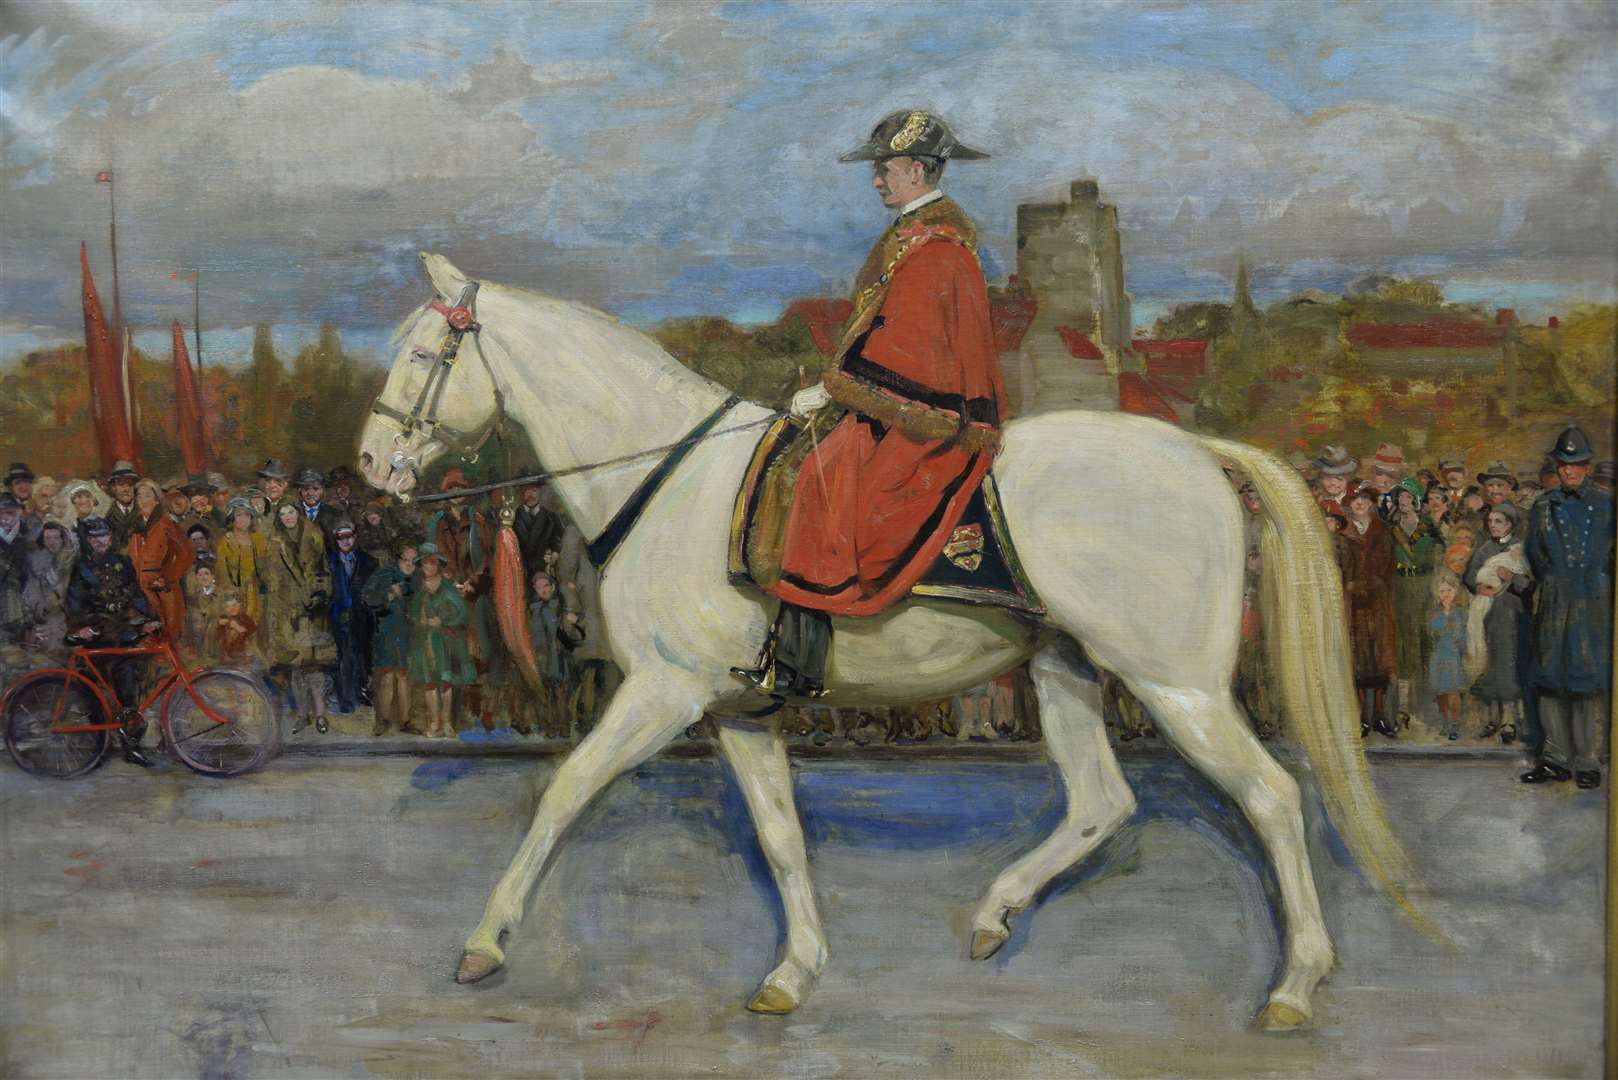 A painting of Sir Garrard Tyrwhitt-Drake on his famous white horse